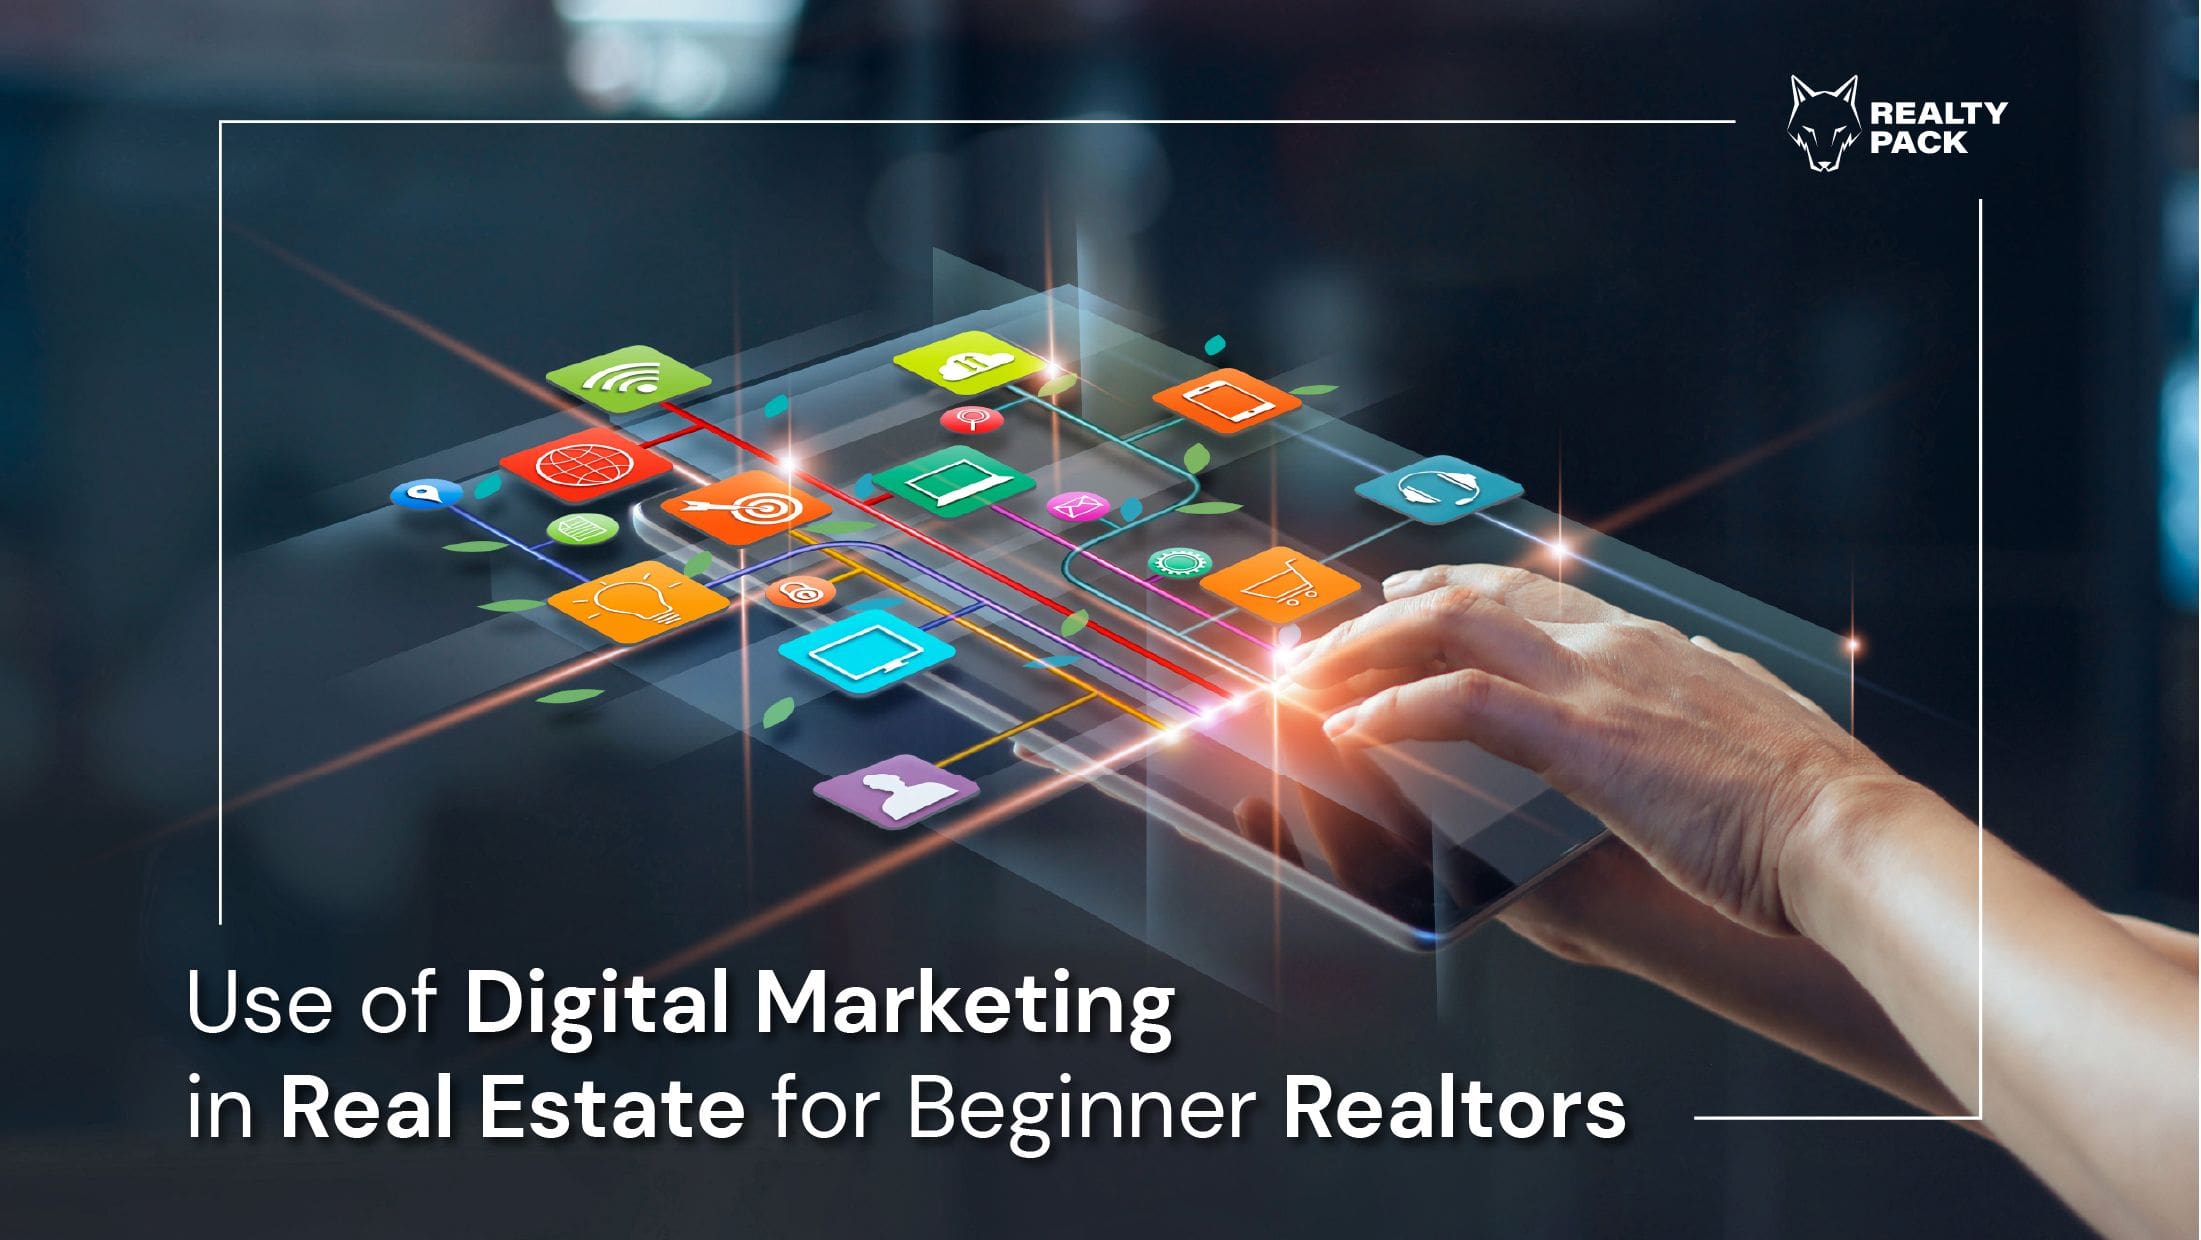 Real Estate Digital Marketing